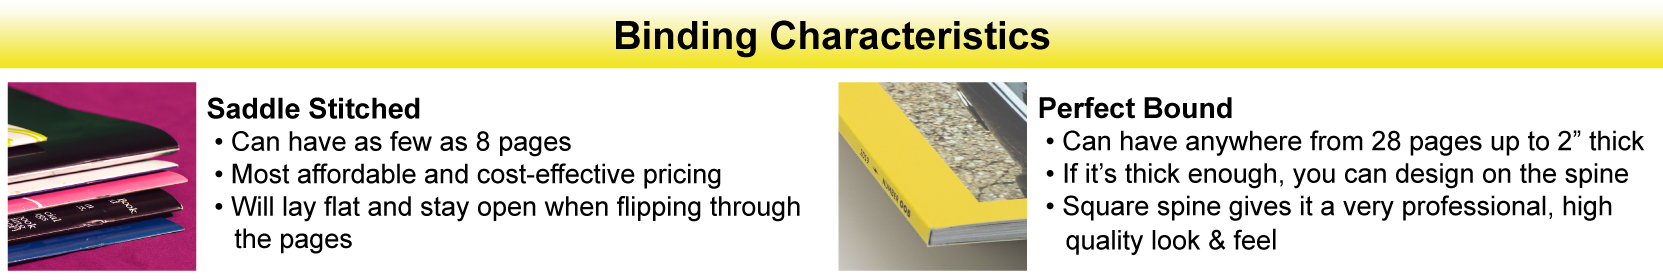 binding-characteristics